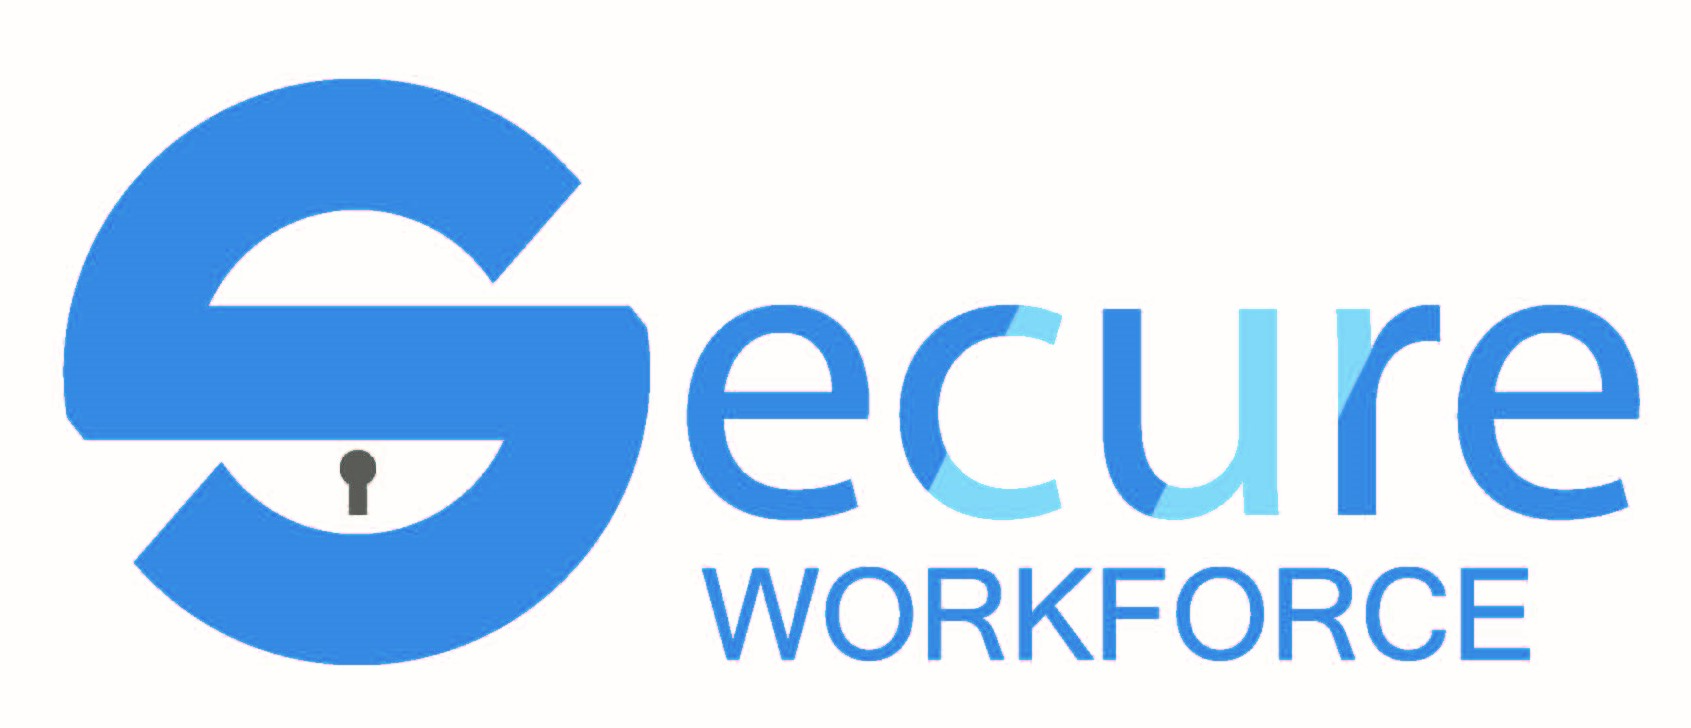 Secure Workforce Limited